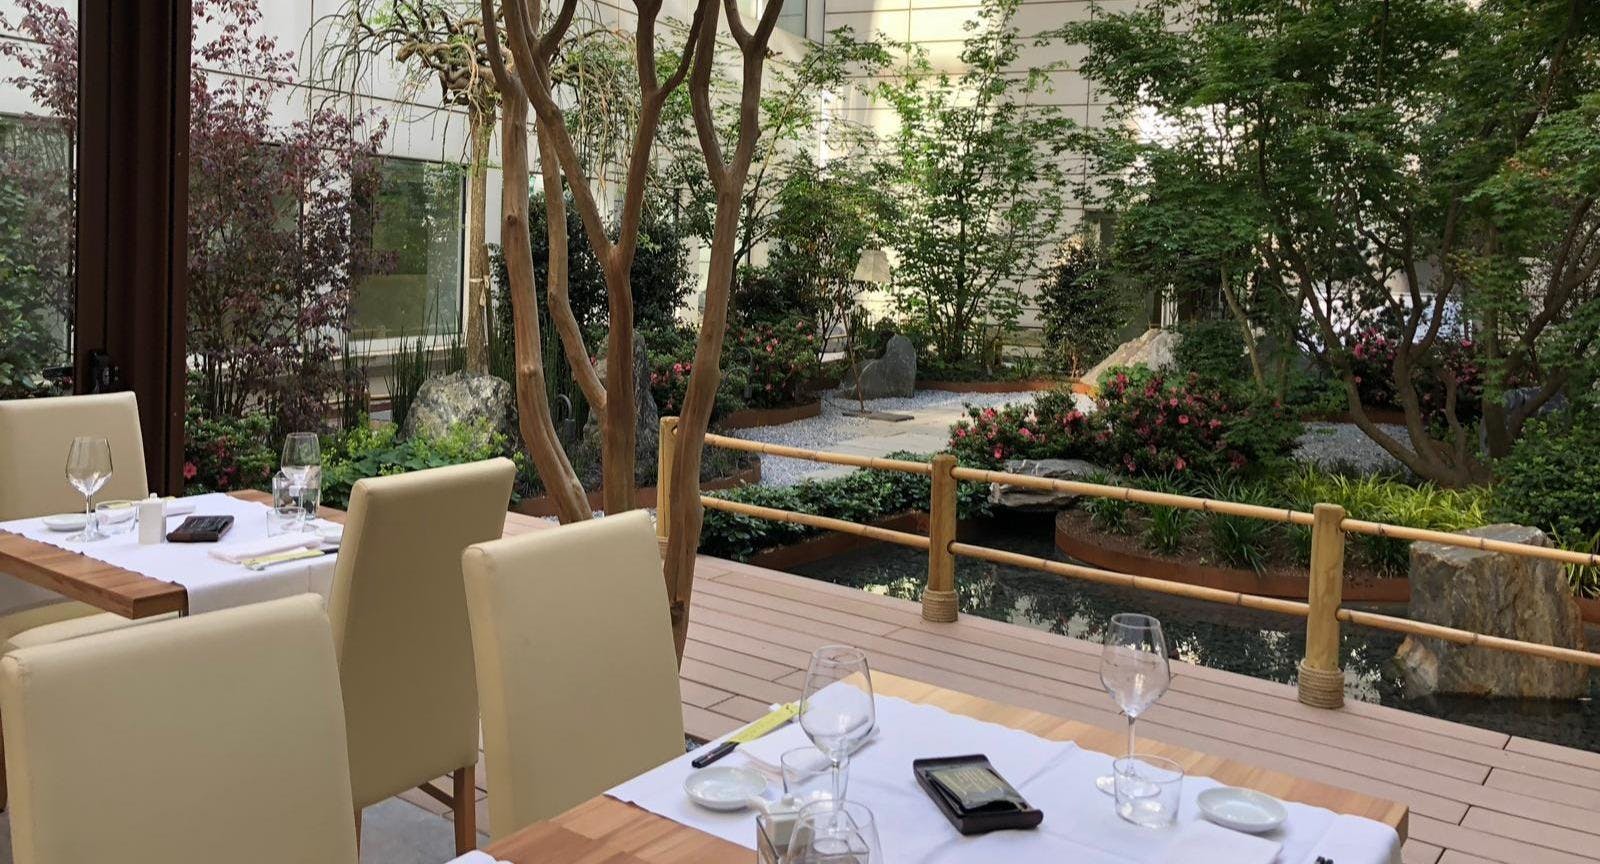 Photo of restaurant Basara Milano Washington in Washington, Milan